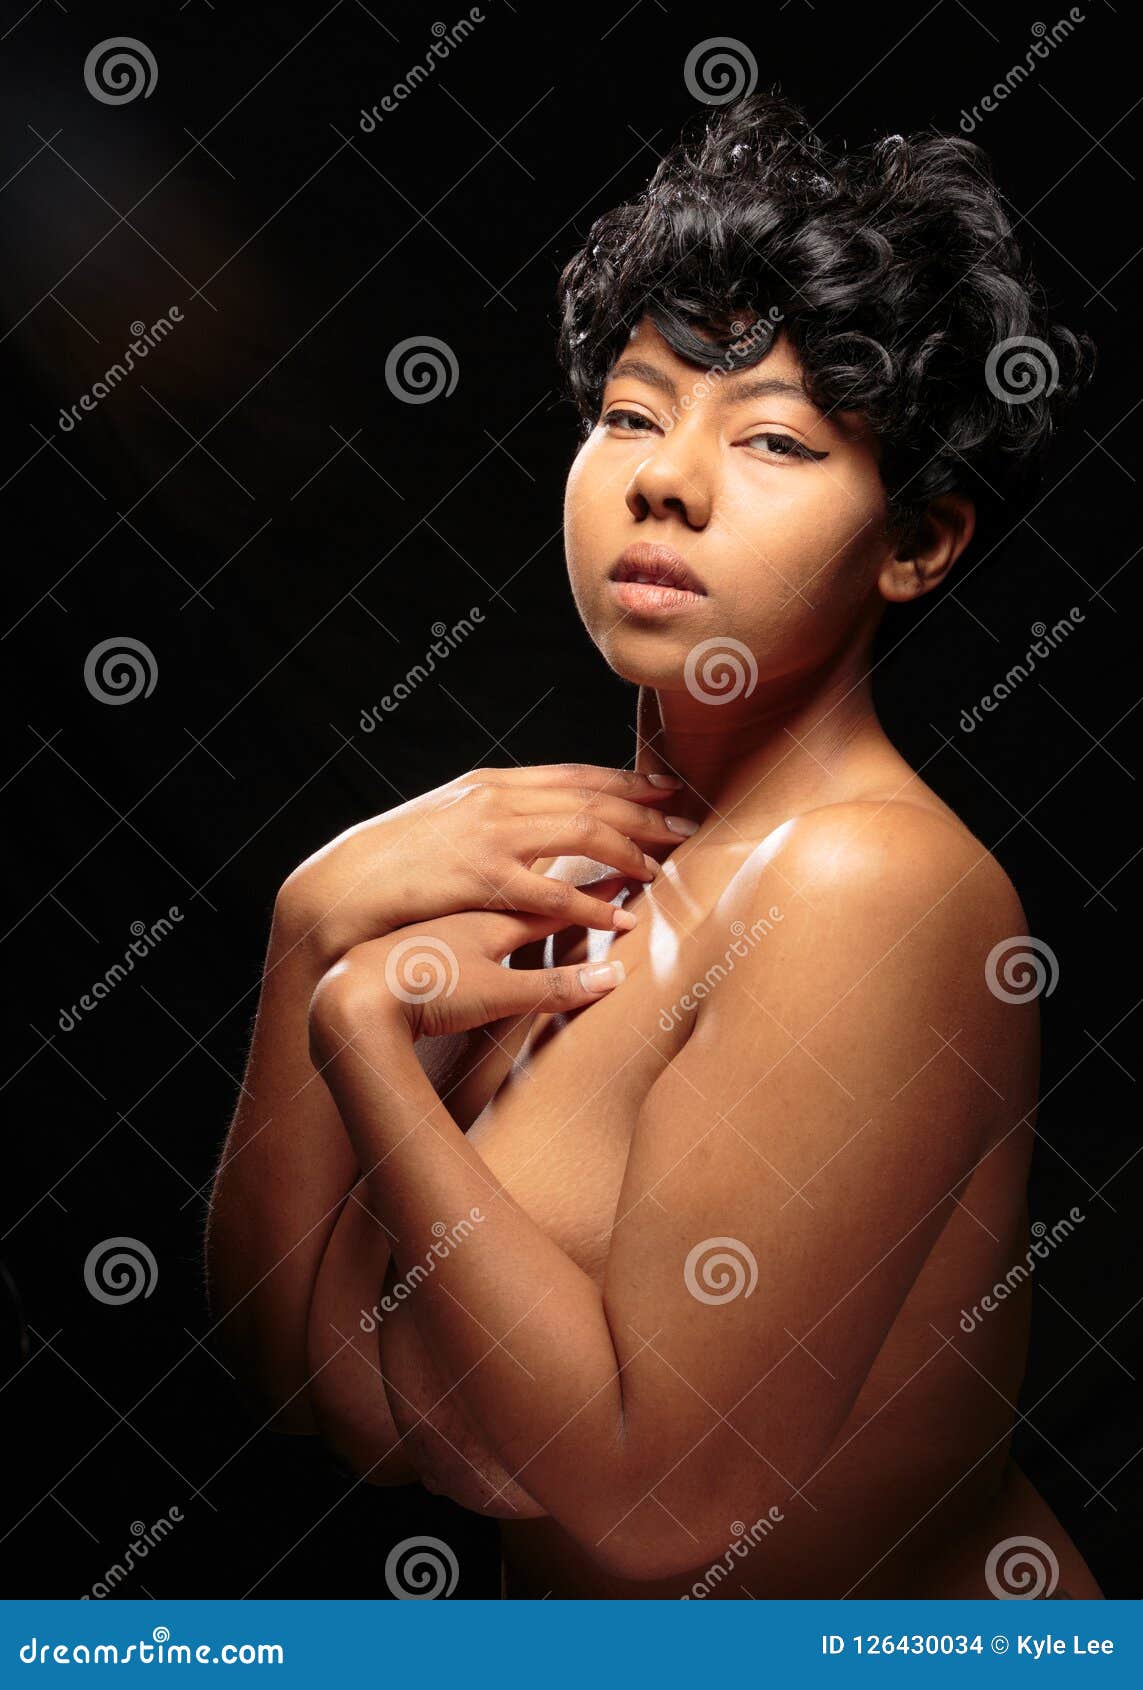 Black woman nude professional photoshoot Buxom Black Woman Nude Studio Shots Stock Photo Image Of Back Sensual 126430034